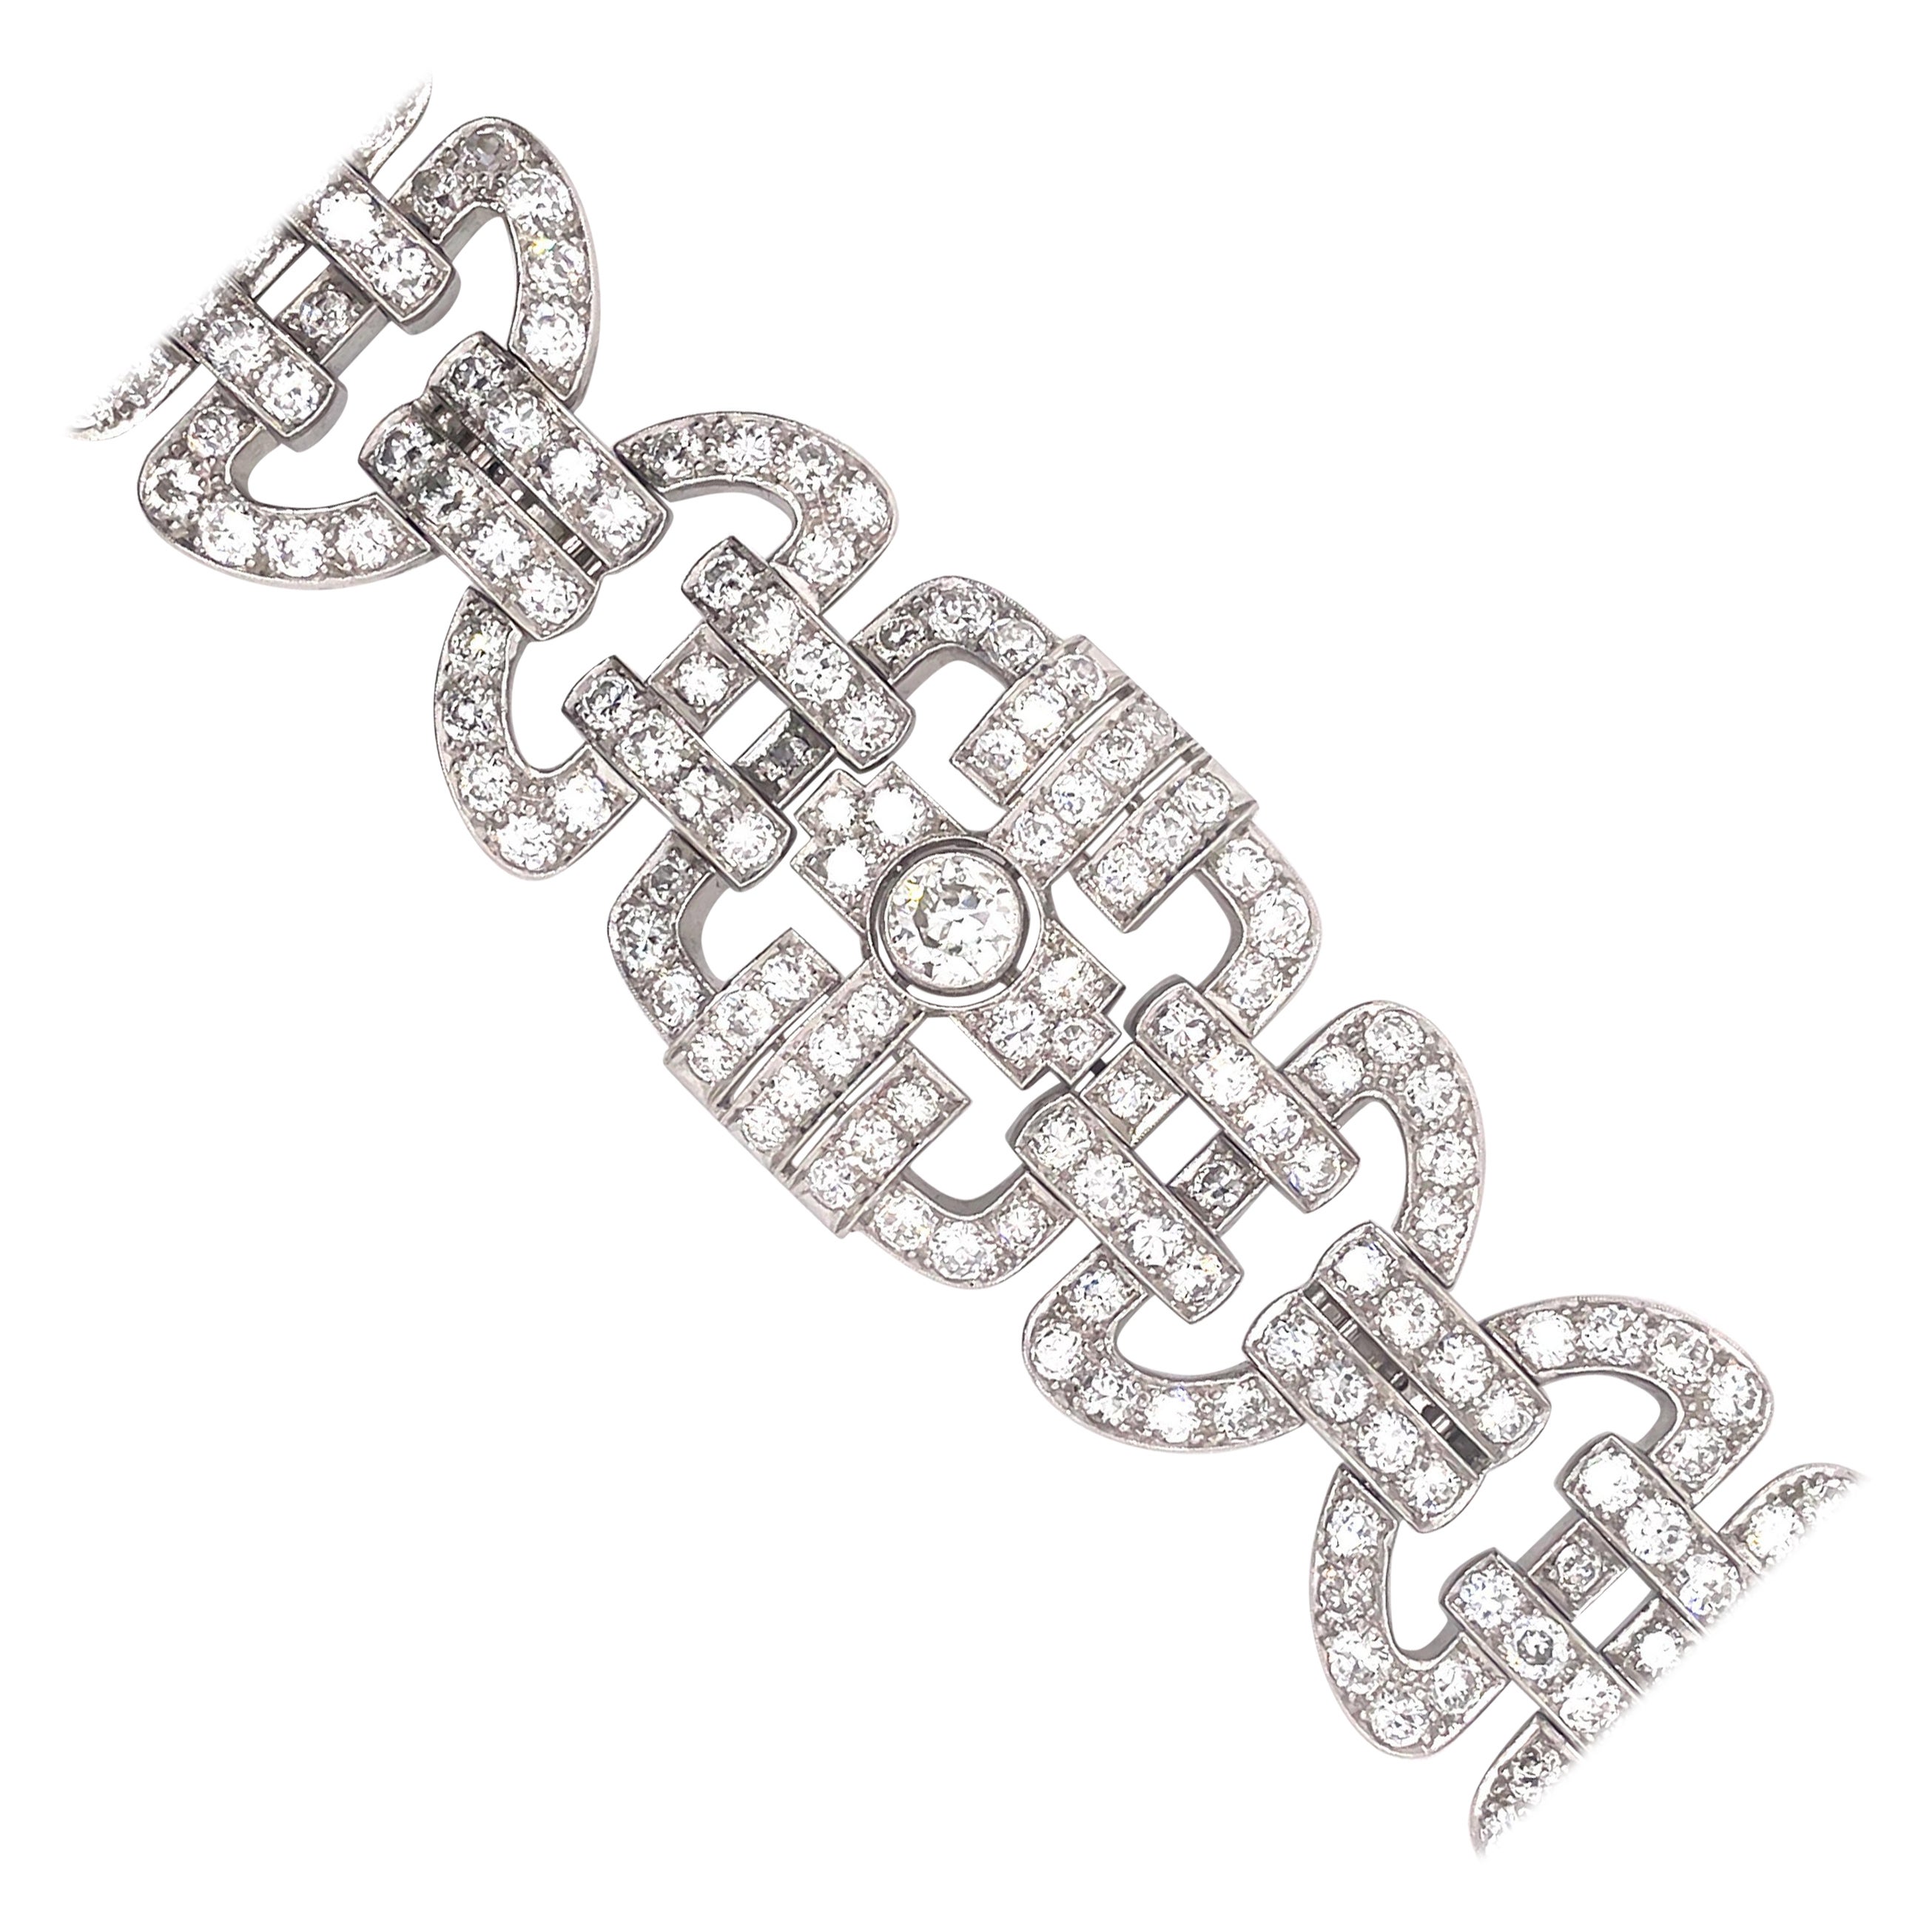 Art Deco Style Apx 35ct Diamond Bracelet Platinum